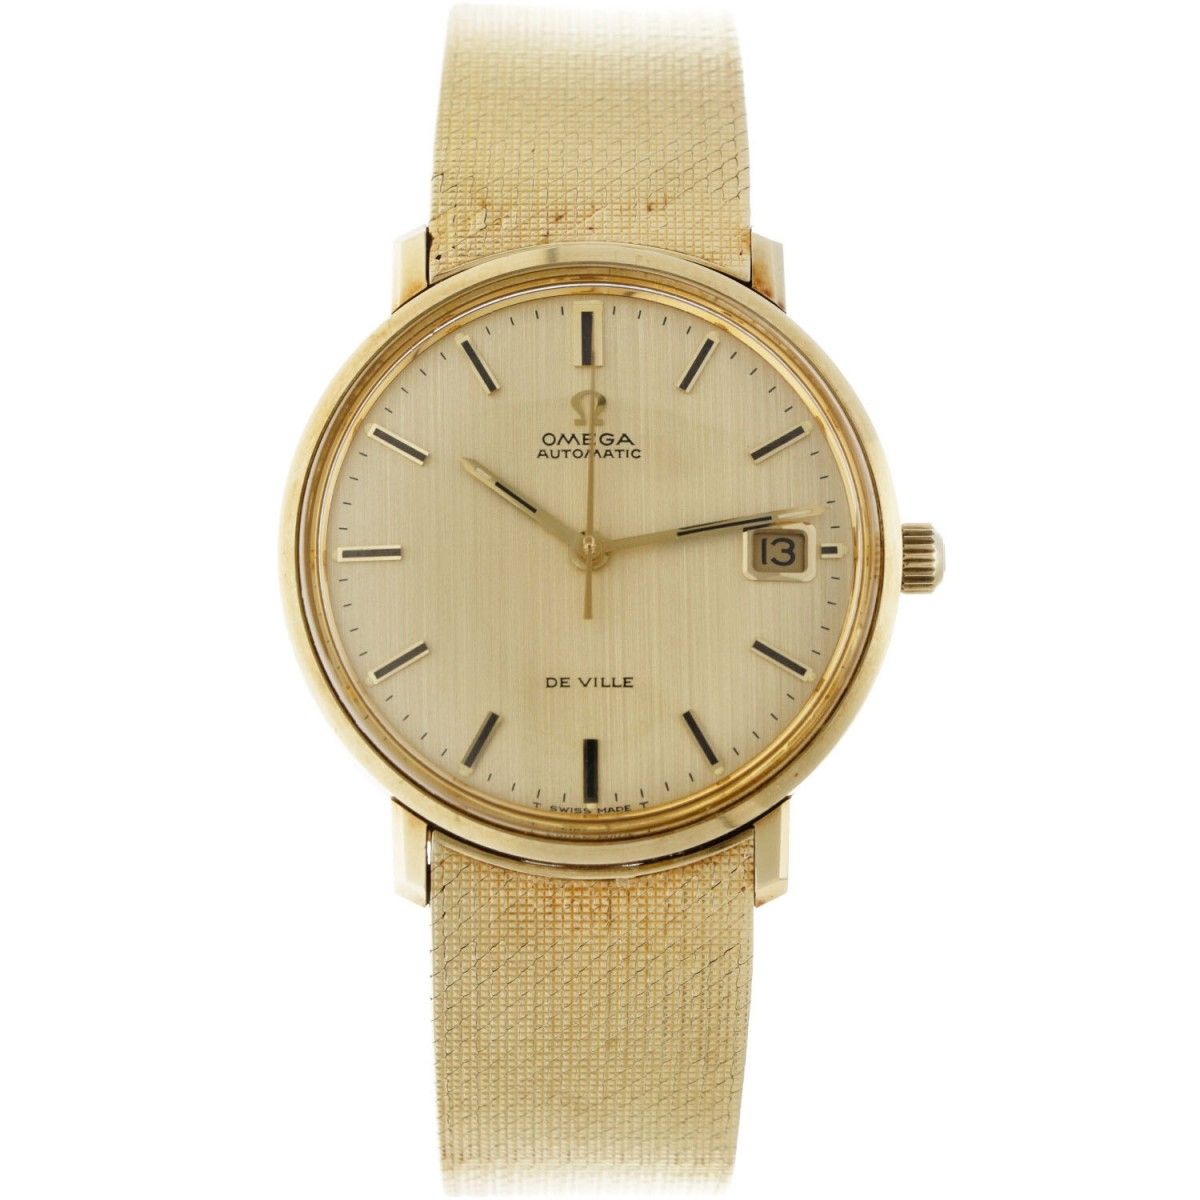 Omega de Ville 166.033 - Men's watch - apprx. 1974. Caja: oro amarillo (14 kt.) &hellip;